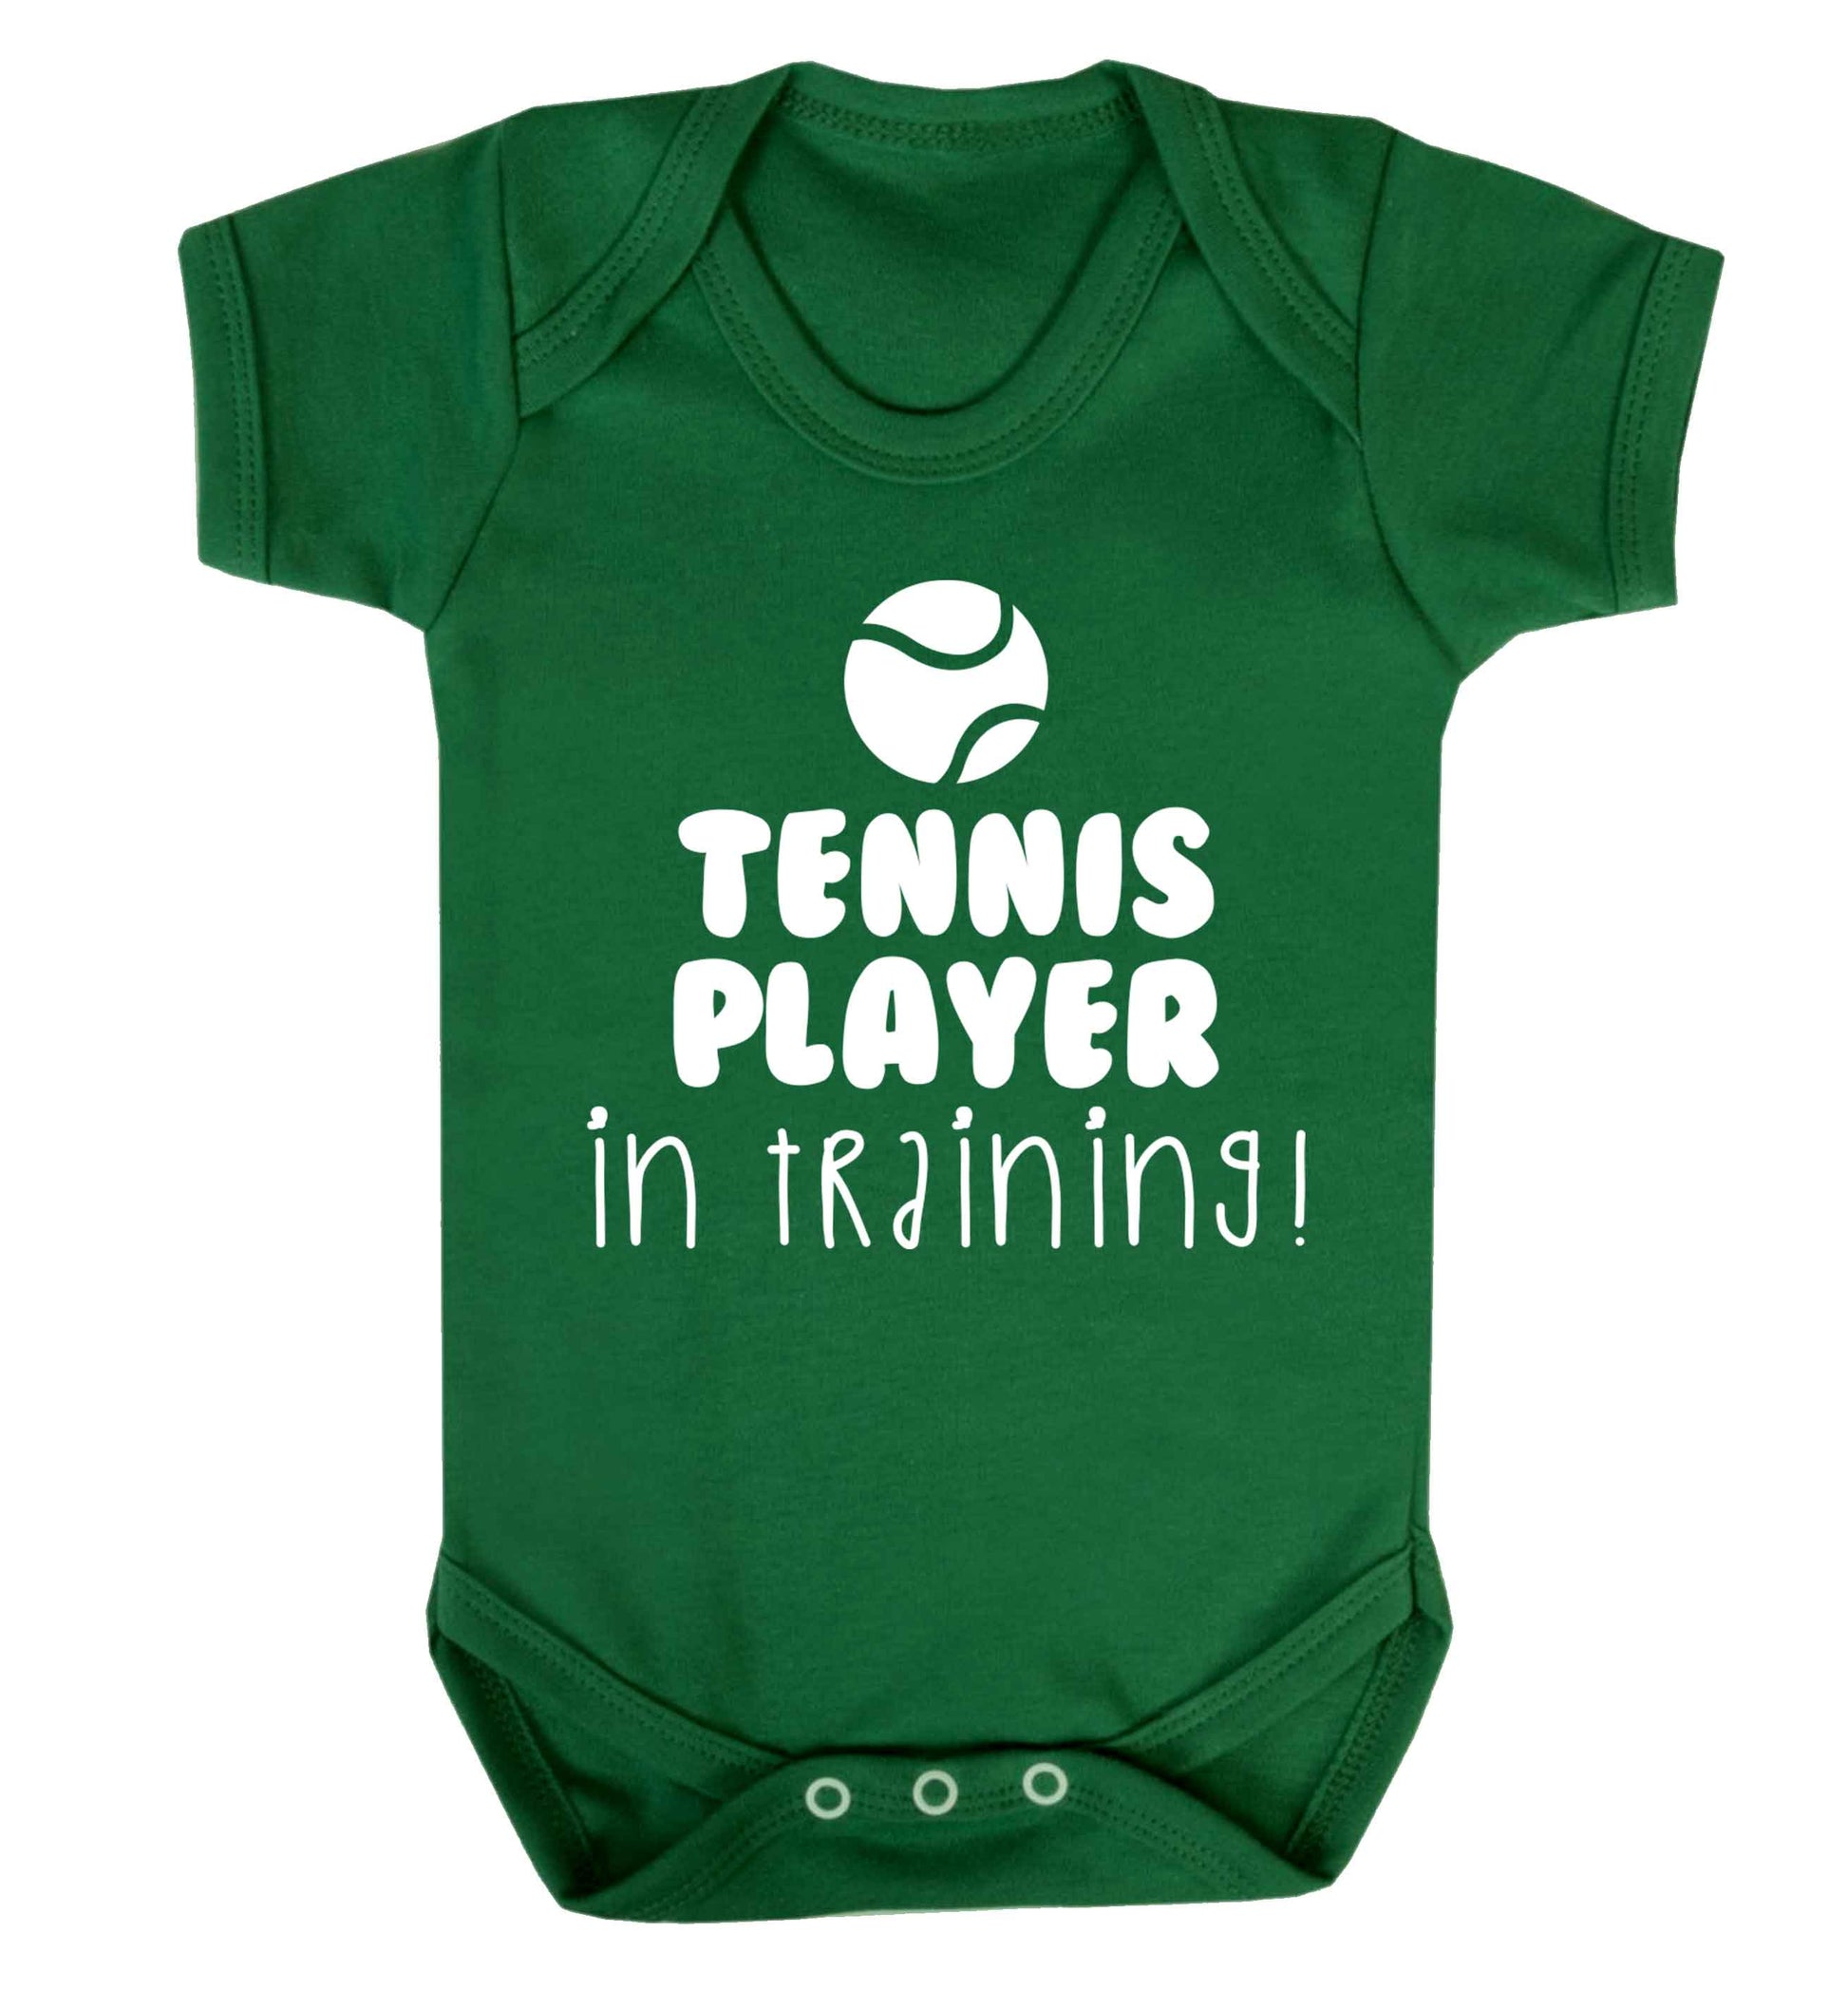 Tennis player in training Baby Vest green 18-24 months